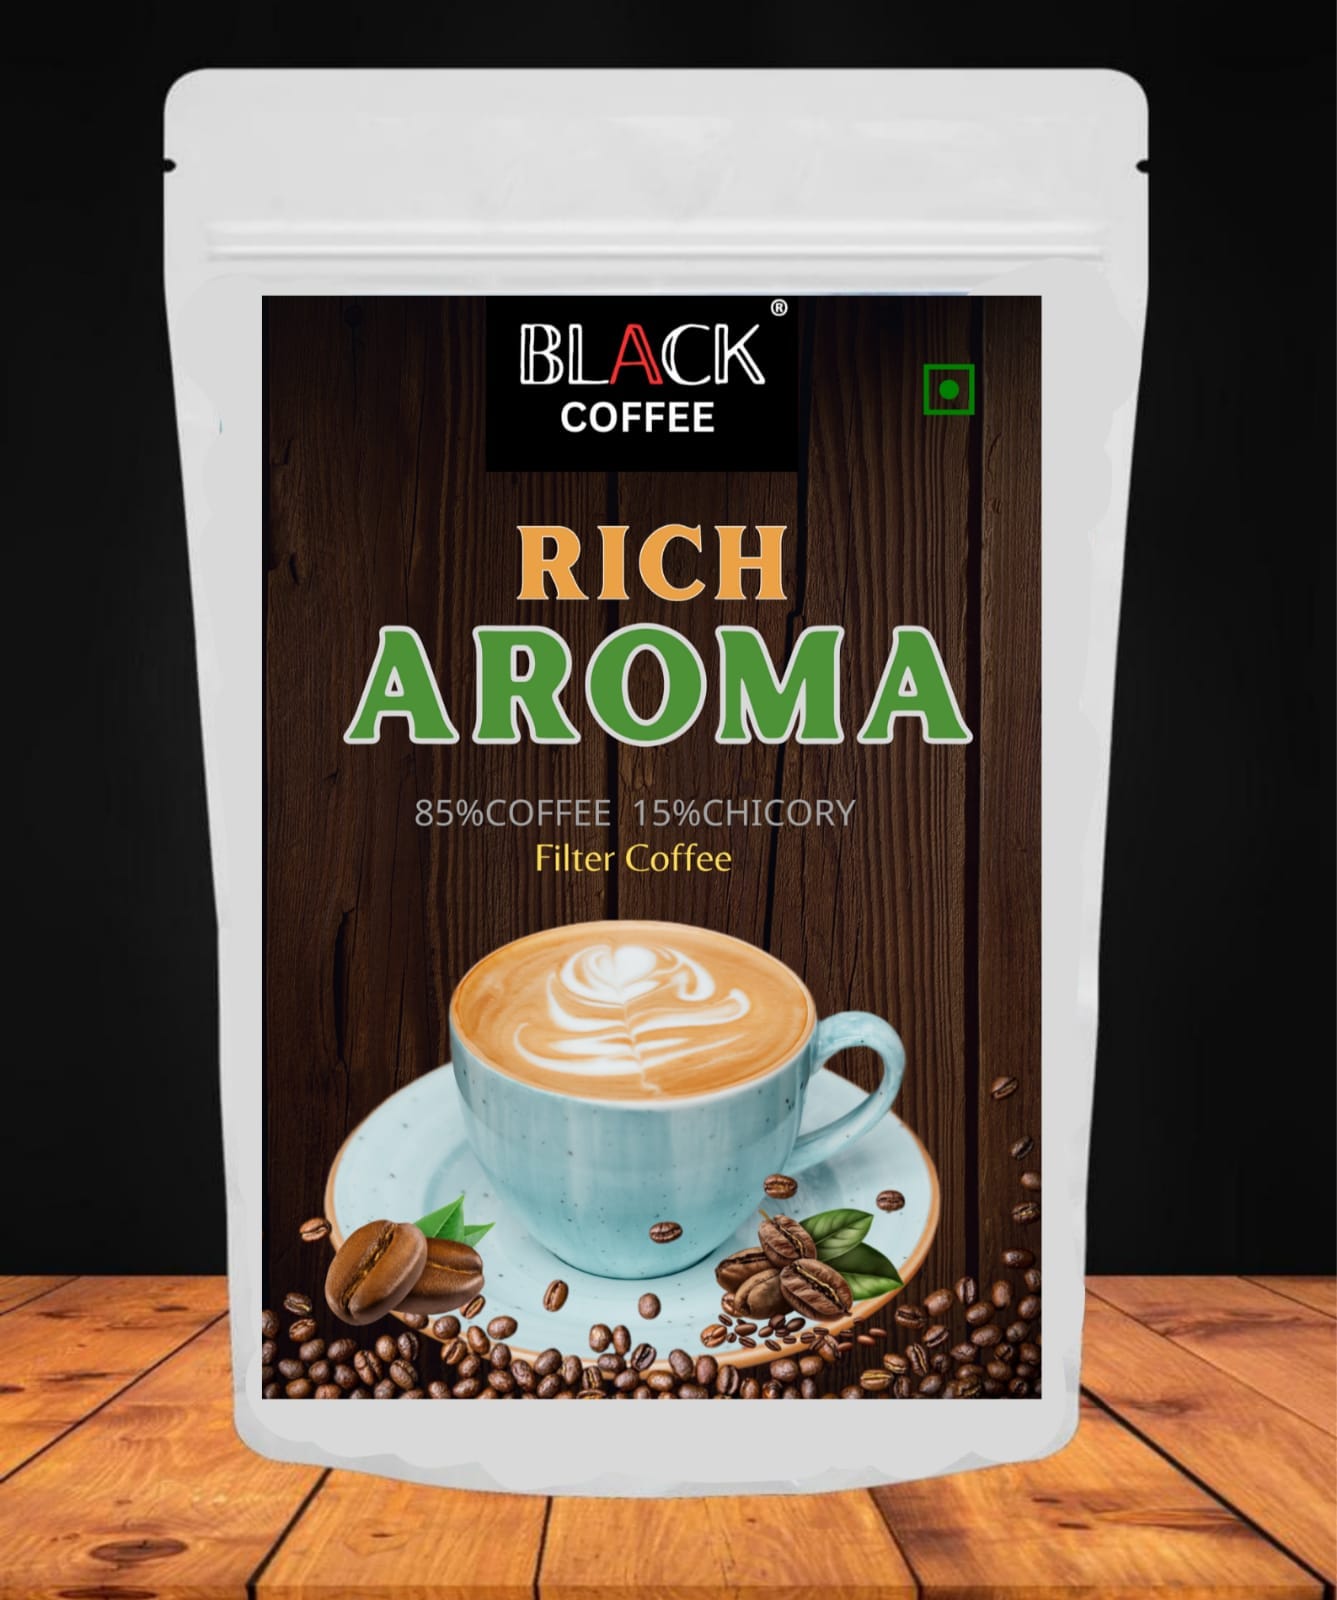 RICH AROMA, (85%Coffee, 15%Chicory Premium Blend ), Black Coffee Roasters